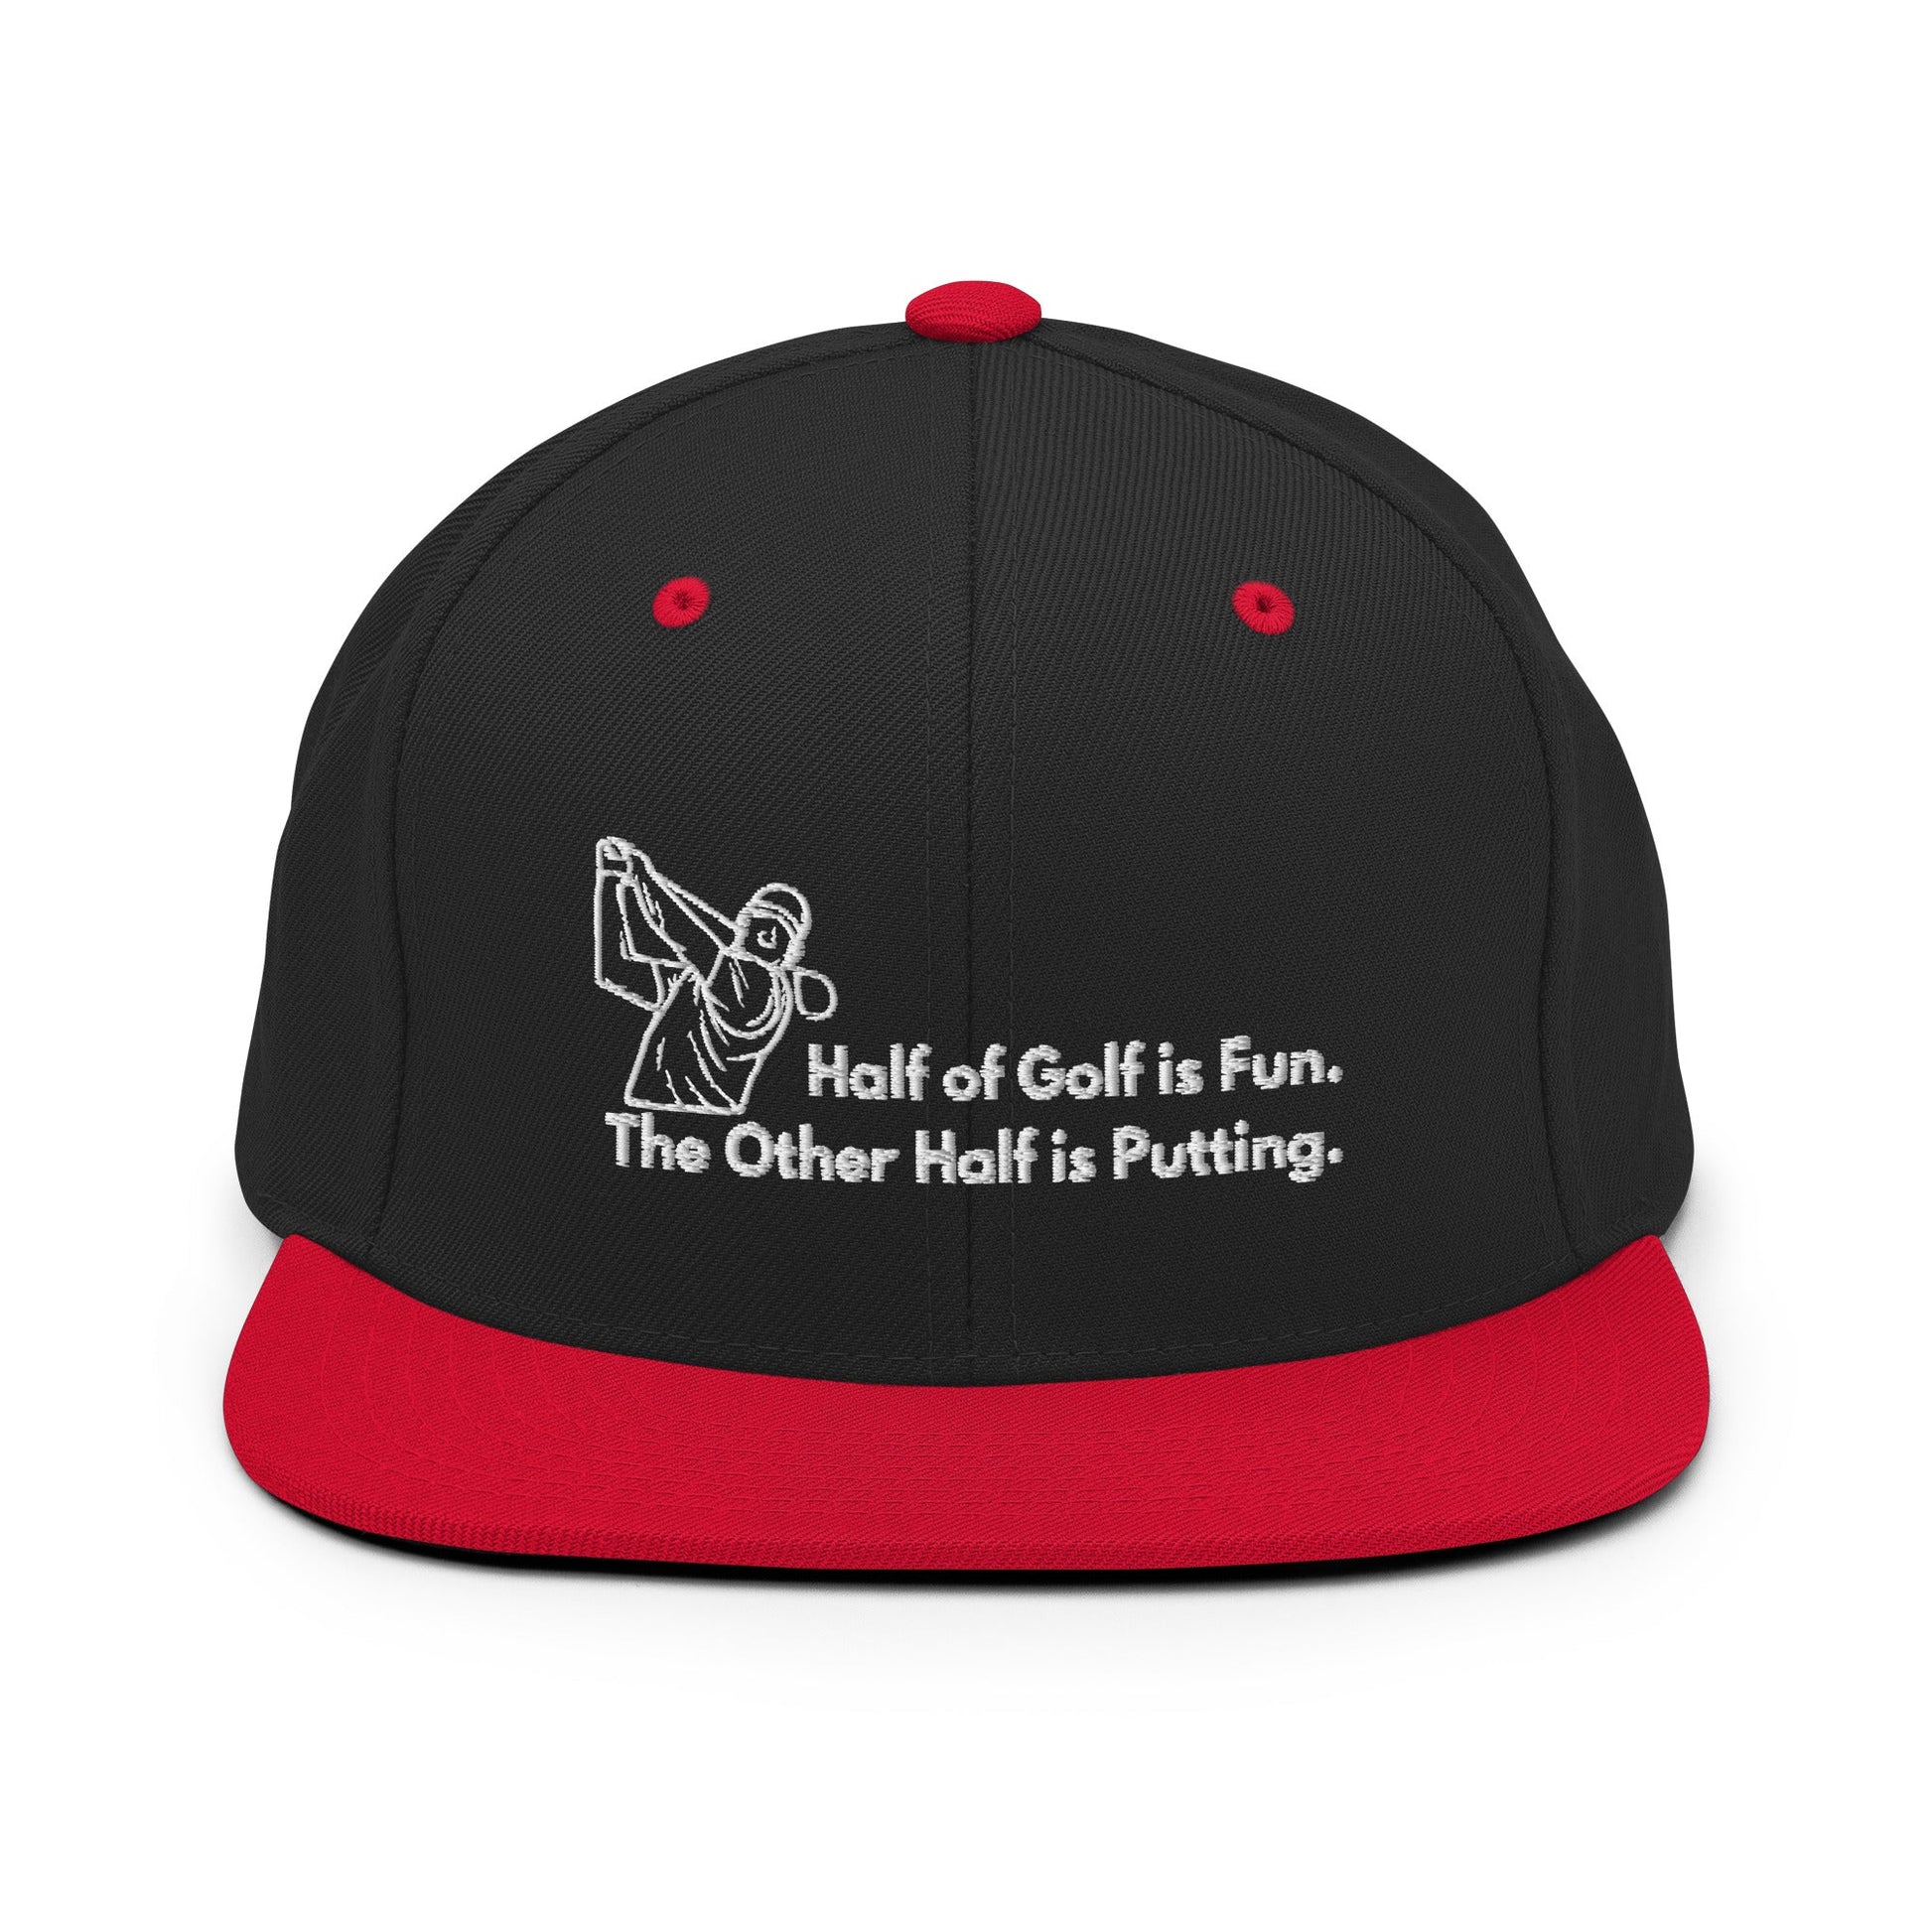 Funny Golfer Gifts  Snapback Hat Black/ Red Half of Golf is Fun Snapback Hat